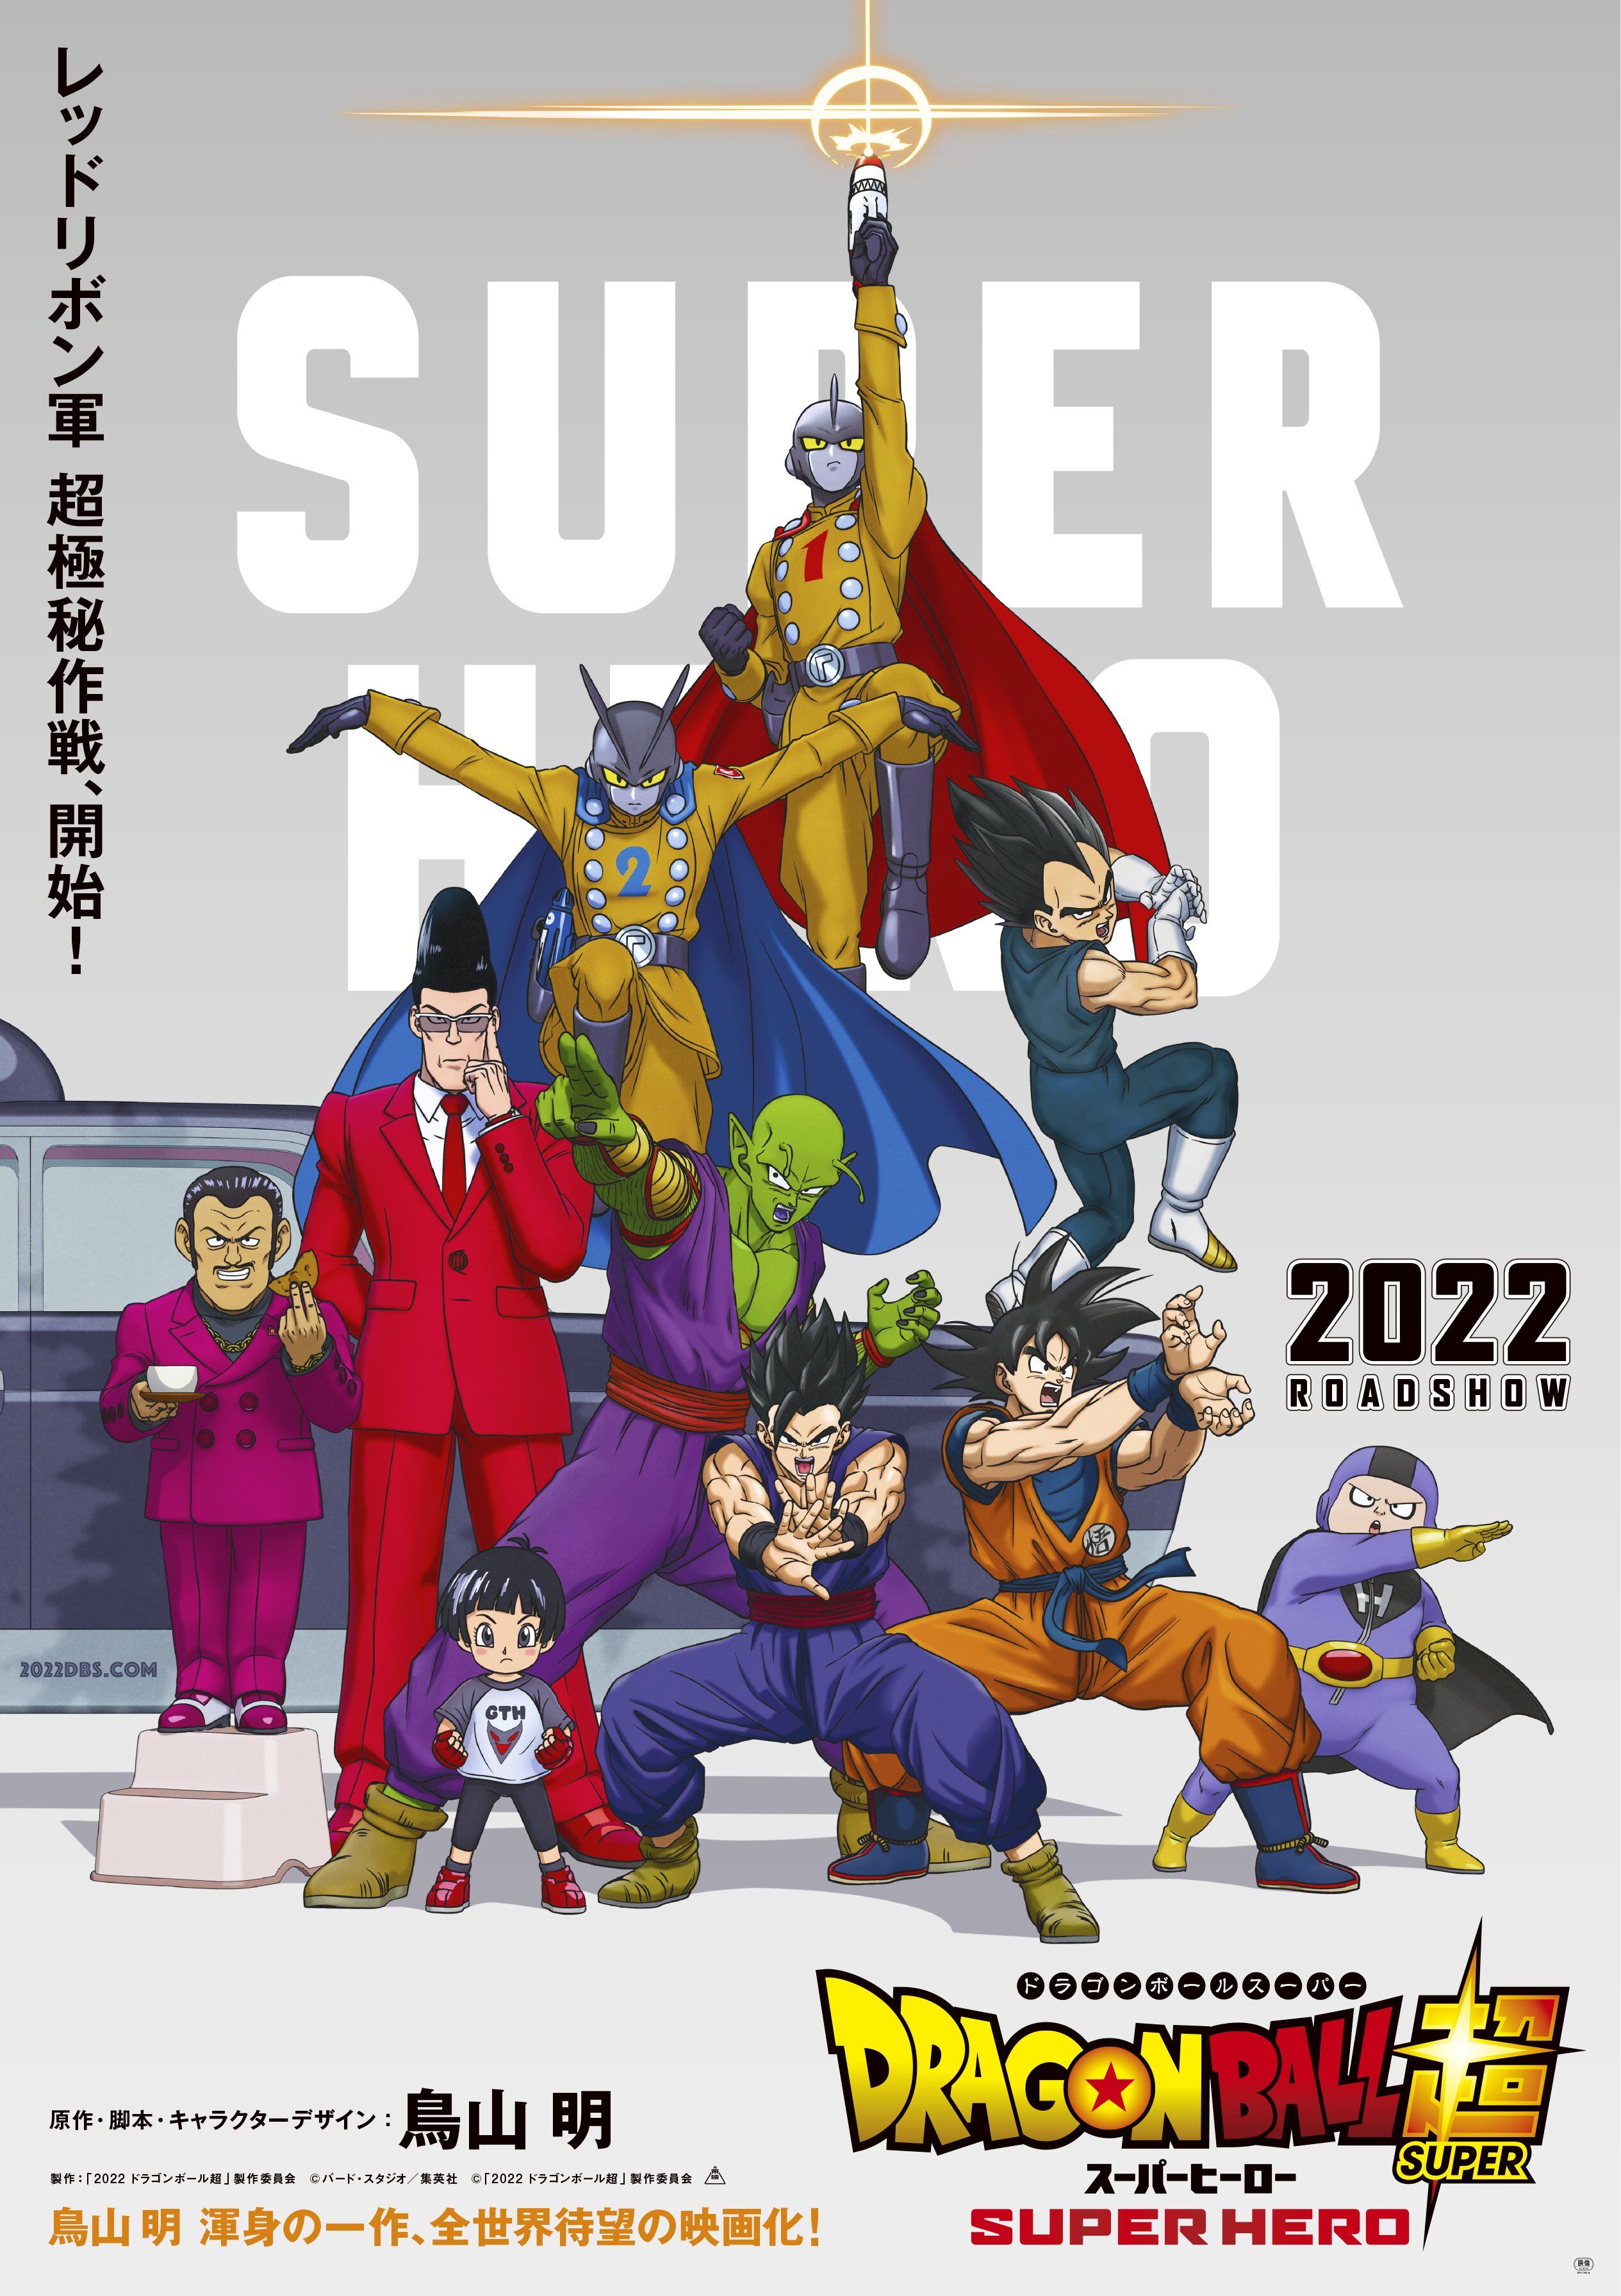 Super Dragon Ball Heroes (web series) - Wikipedia